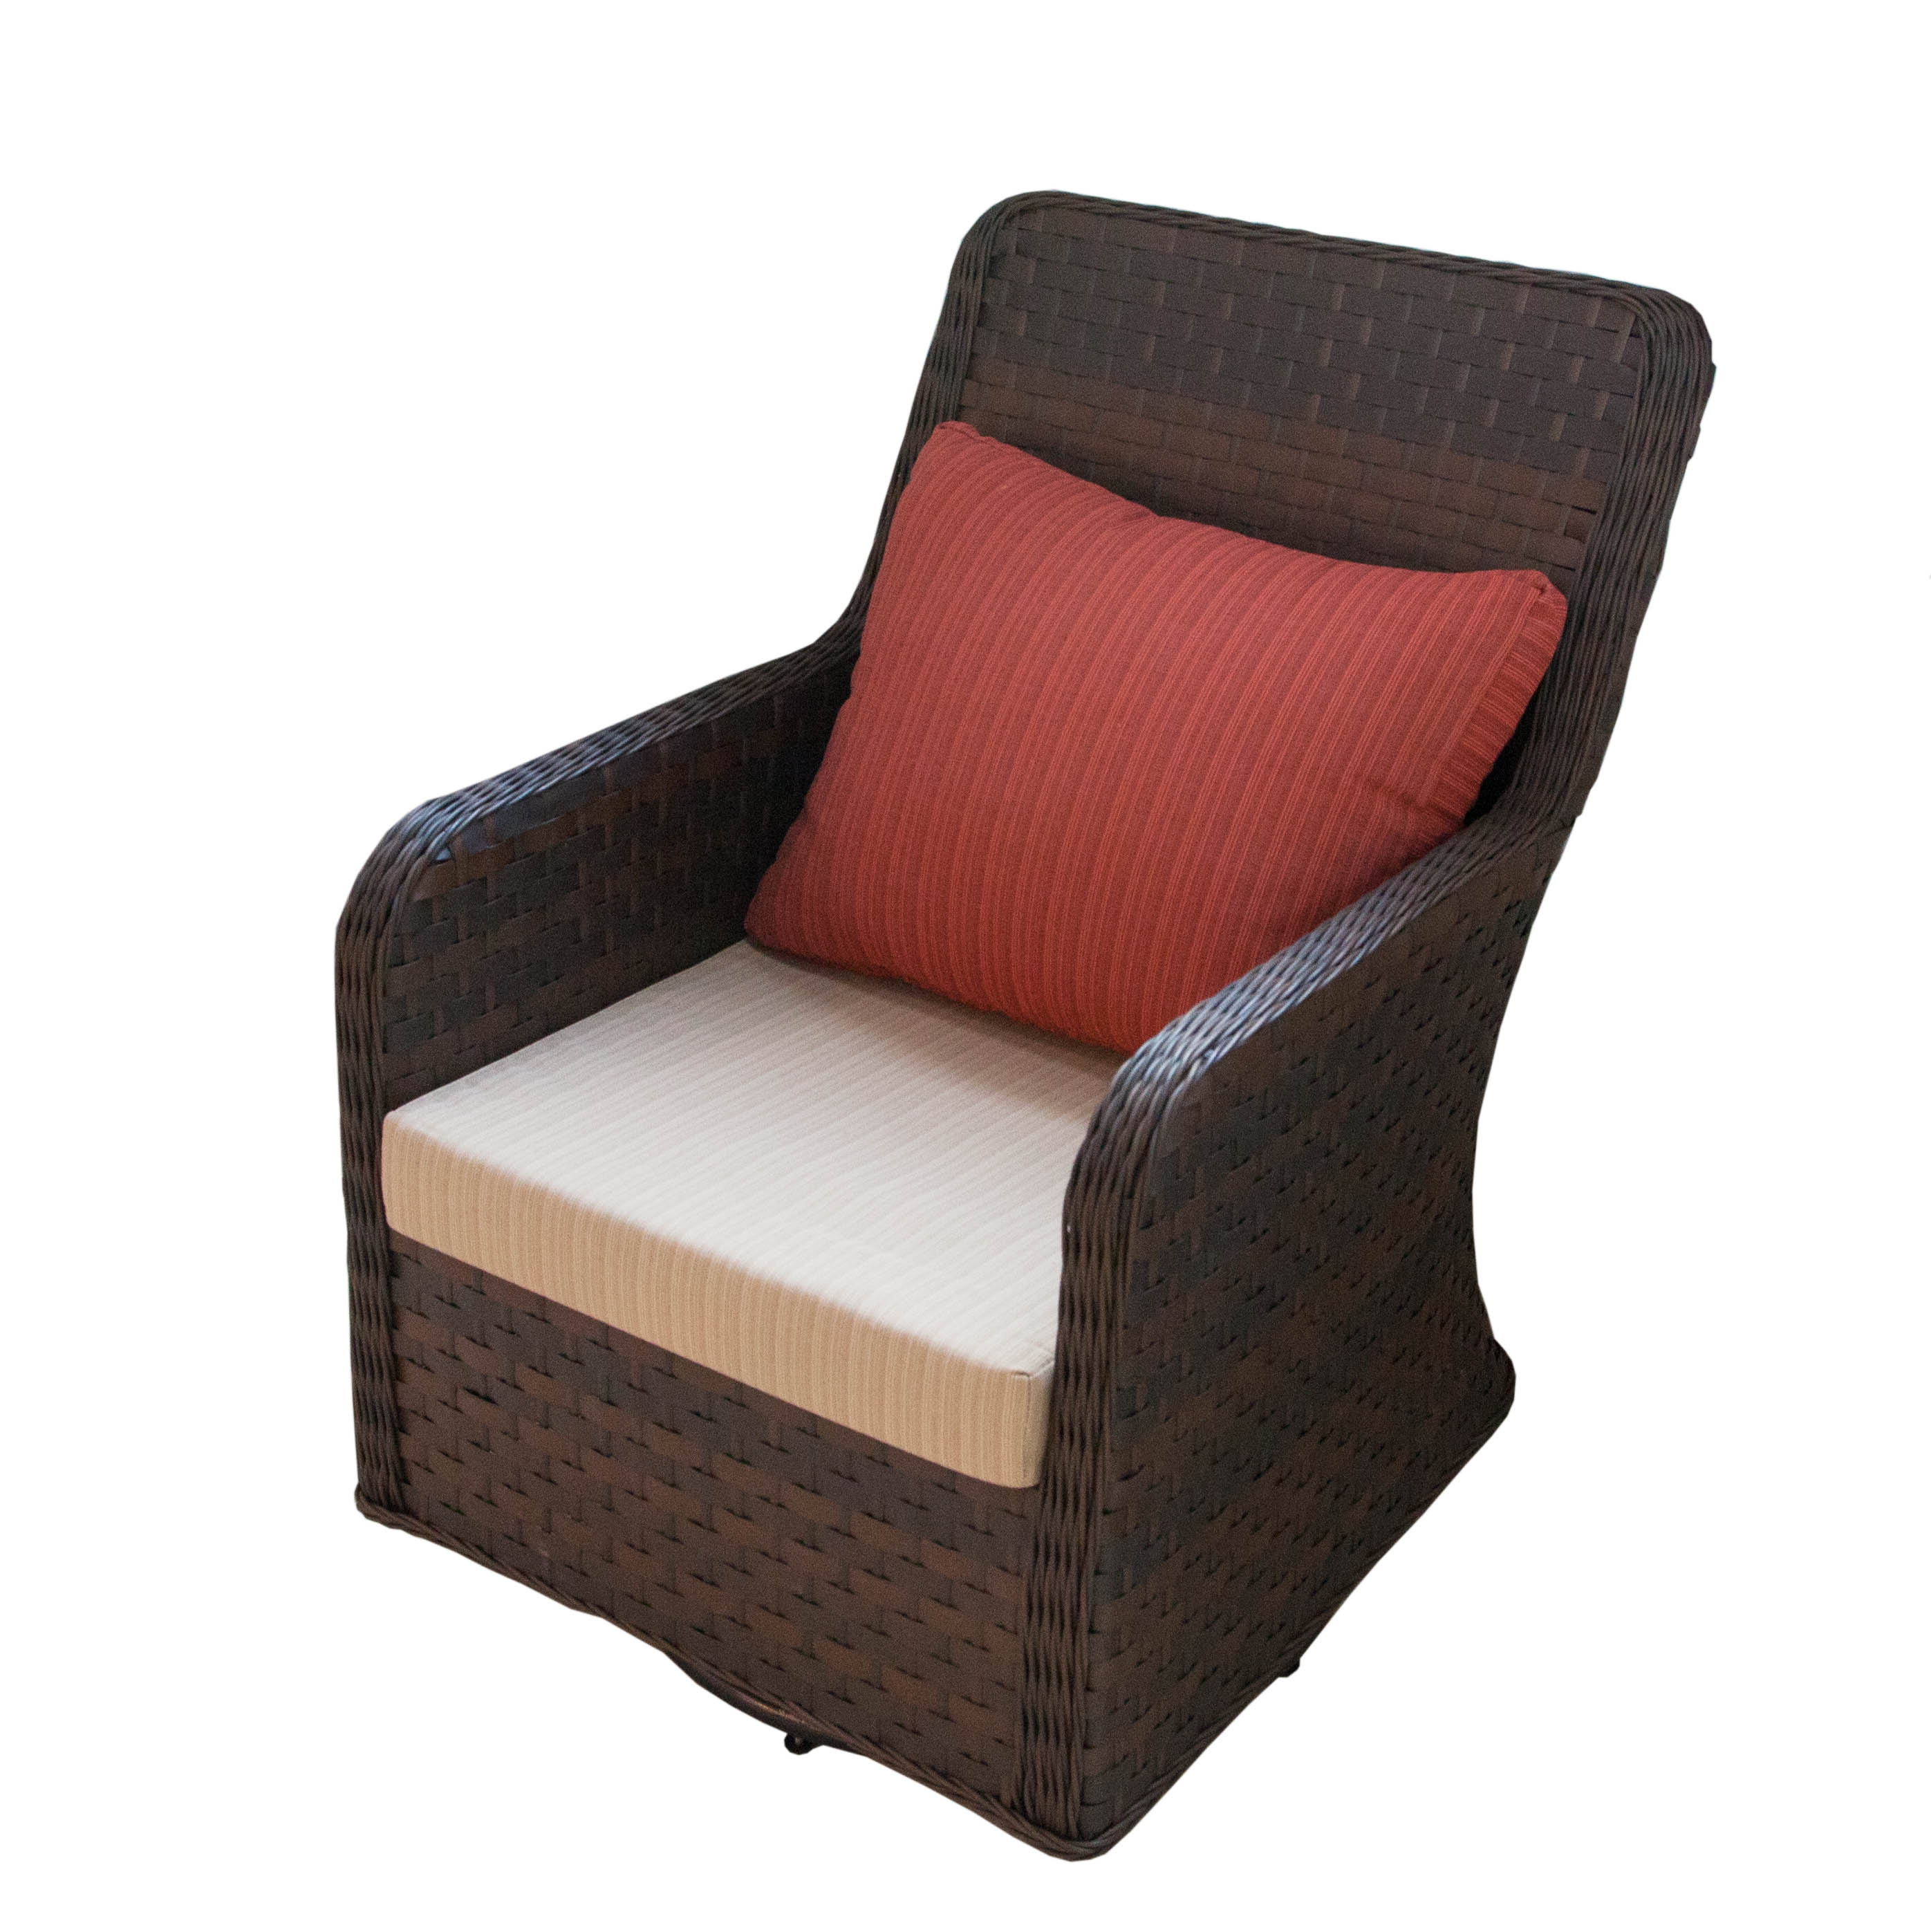 Комплект мебели Tengorattan, цвет коричневый, размер 62 х 63 х 78 см - фото 2